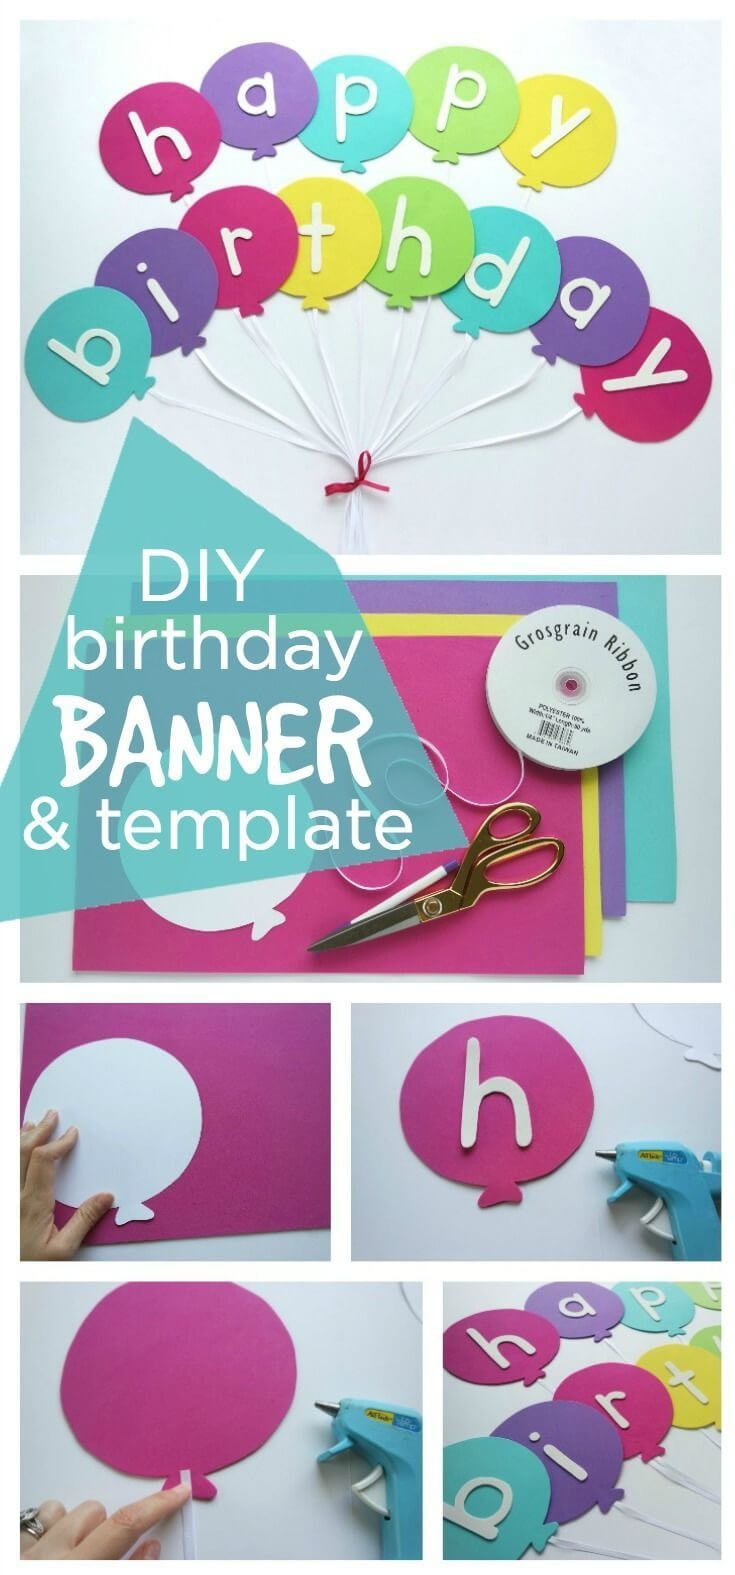 Happy Birthday Banner Diy Template – Birthday Decor Inside Diy Birthday Banner Template